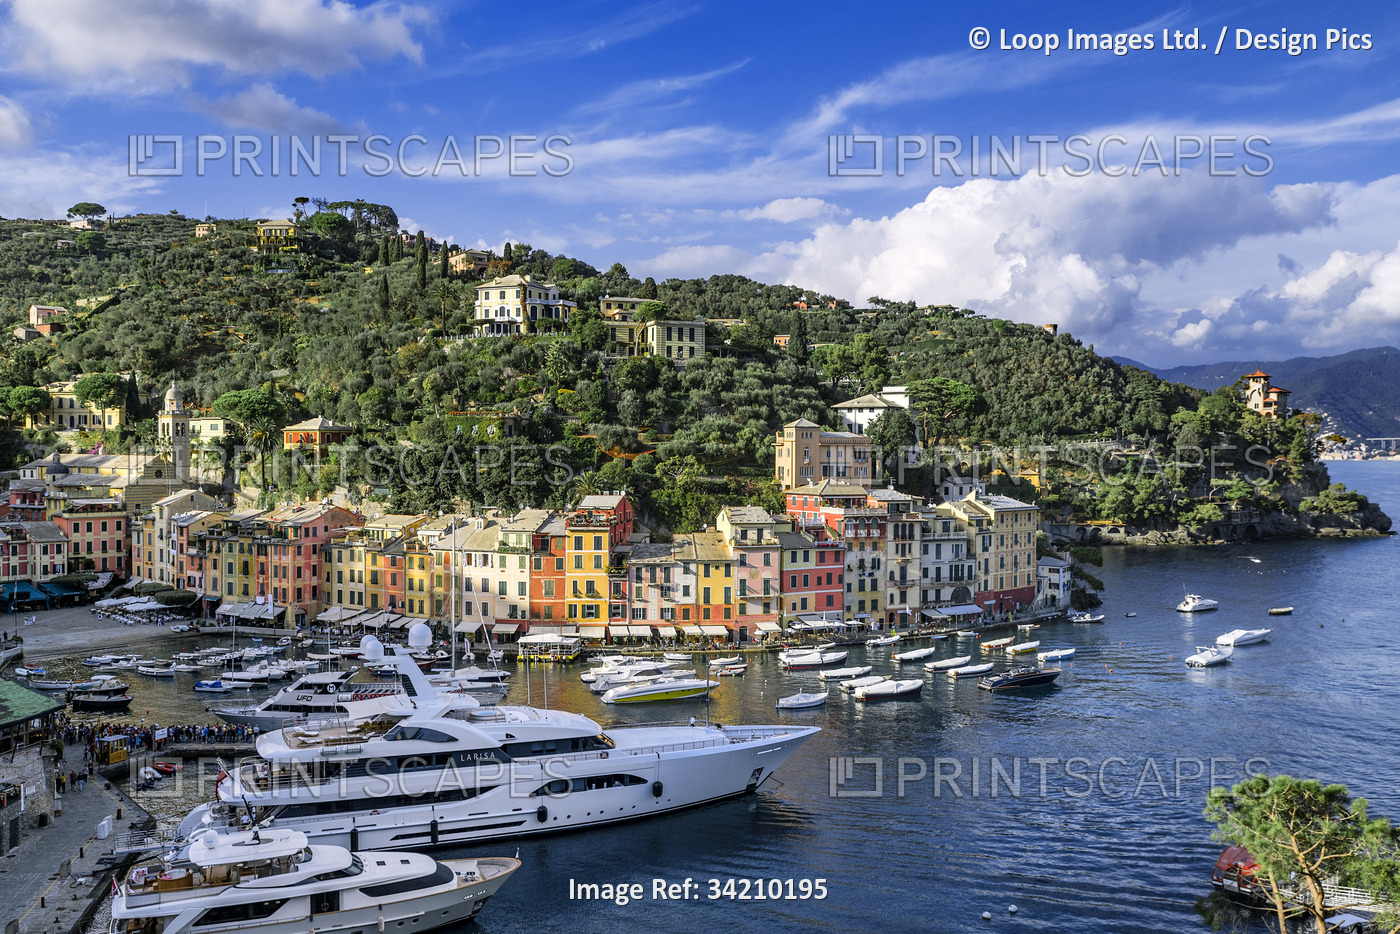 Picturesque harbour and village of Portofino in Liguria in Italy.